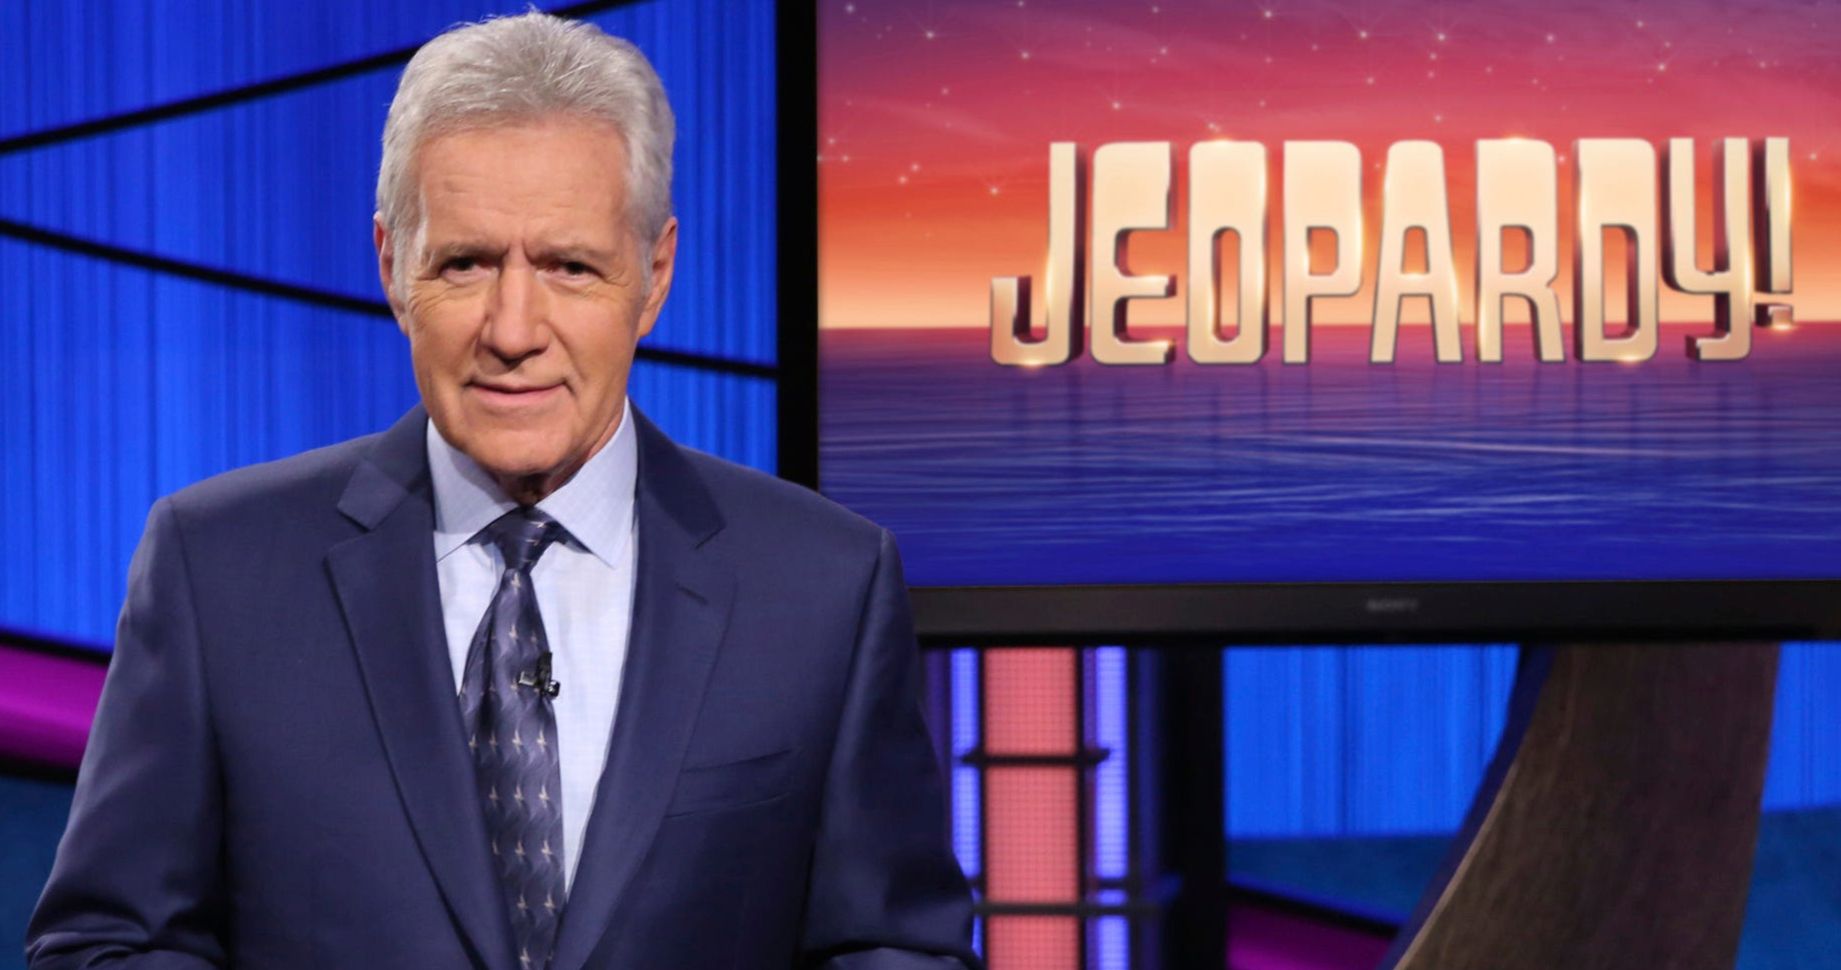 Alex Trebek Dies, Jeopardy! Host Was 80